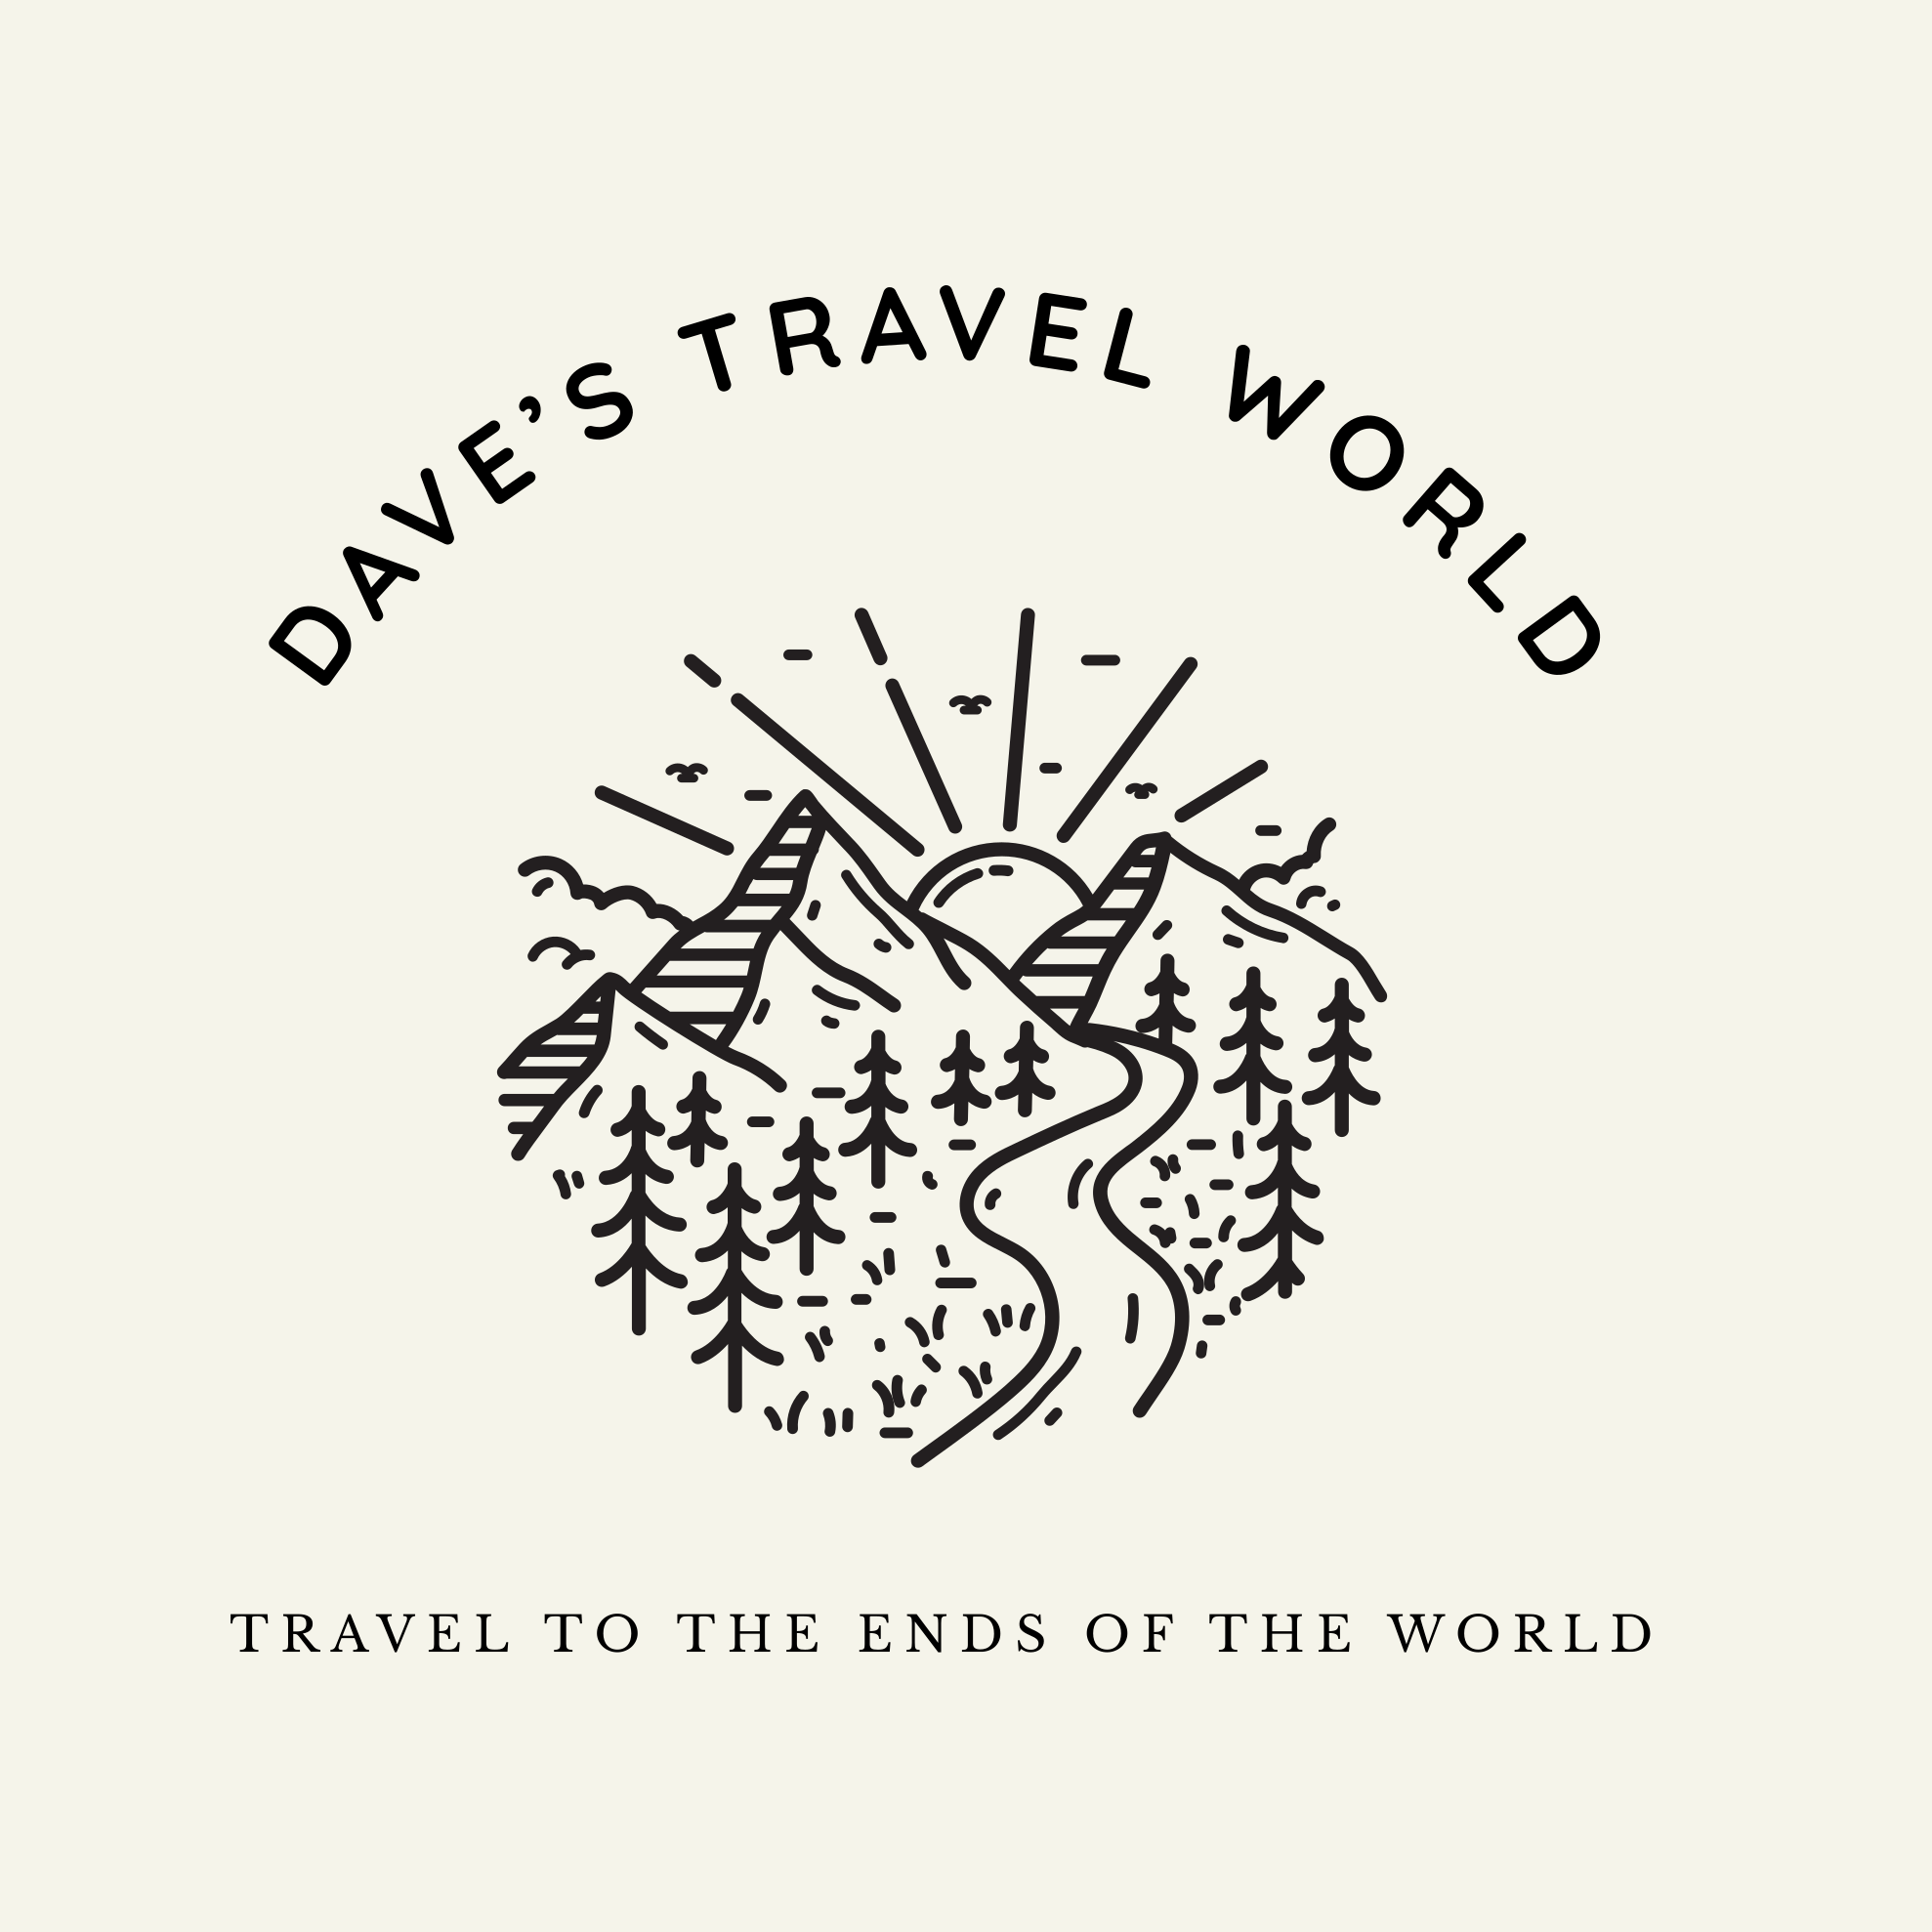 Dave’s Travel World